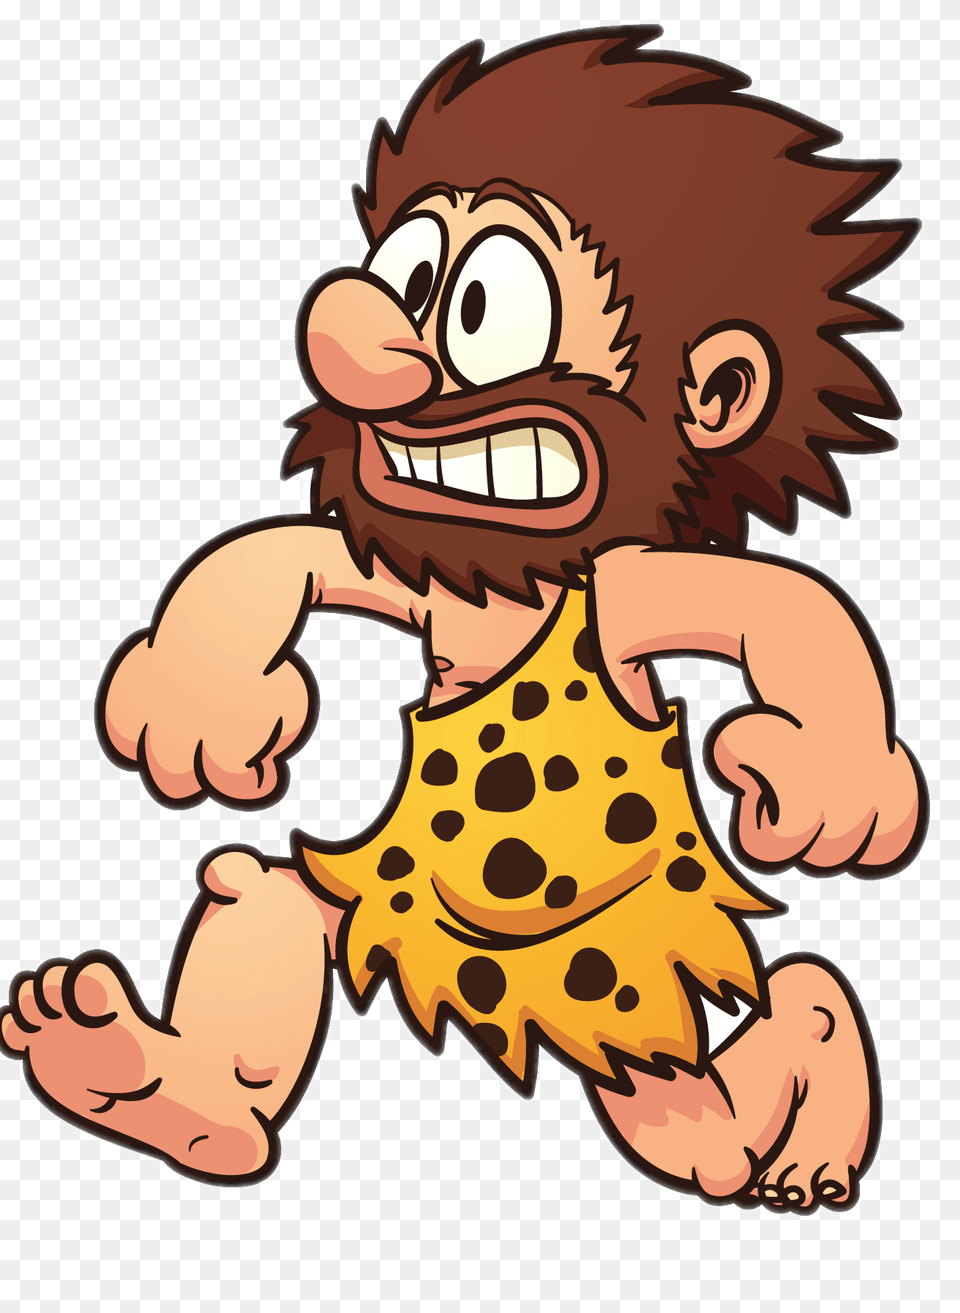 Running Caveman, Baby, Person, Cartoon, Face Png Image